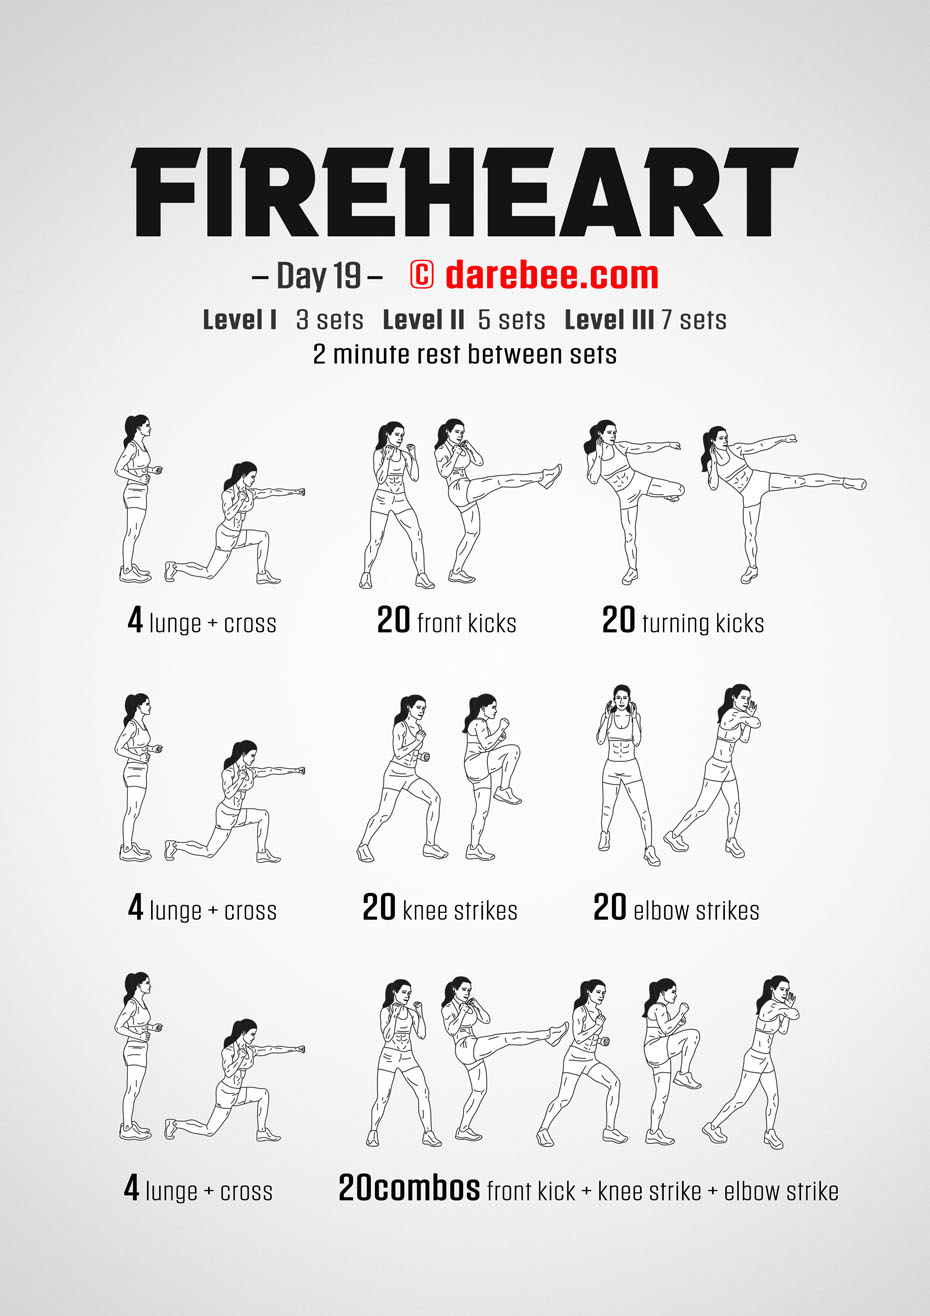 Fireheart - No-Equipment Fitness Program by DAREBEE